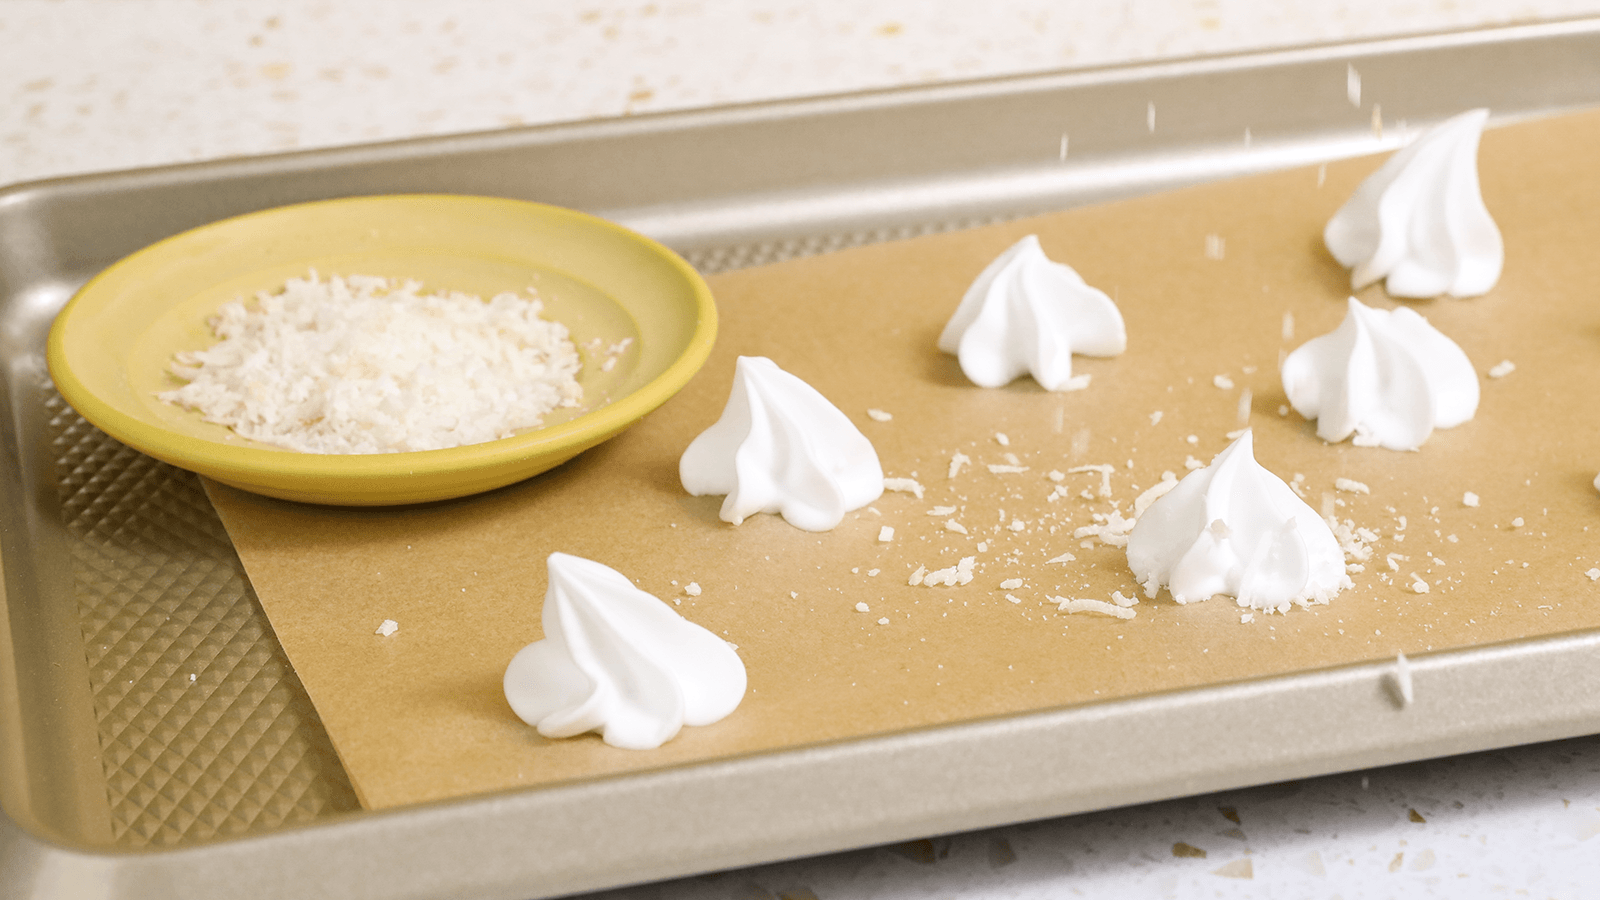 meringue with sprinkled coconut on baking sheet